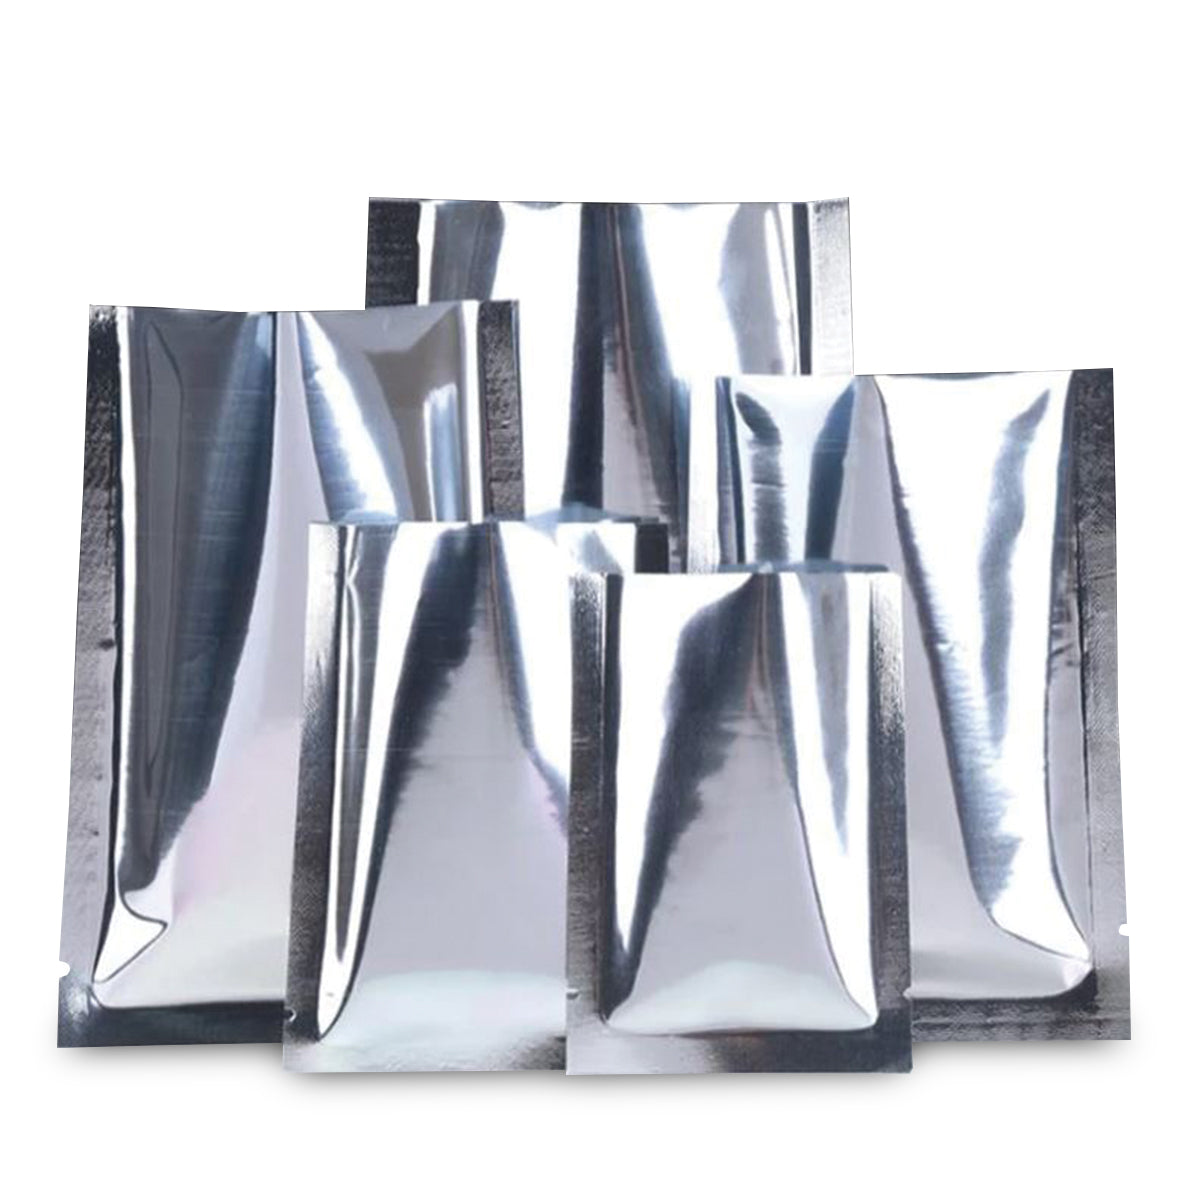 300 mm x 400 mm Aluminum Foil Mylar Bag Food Pouch Storage | Ozpack  Packaging Australia